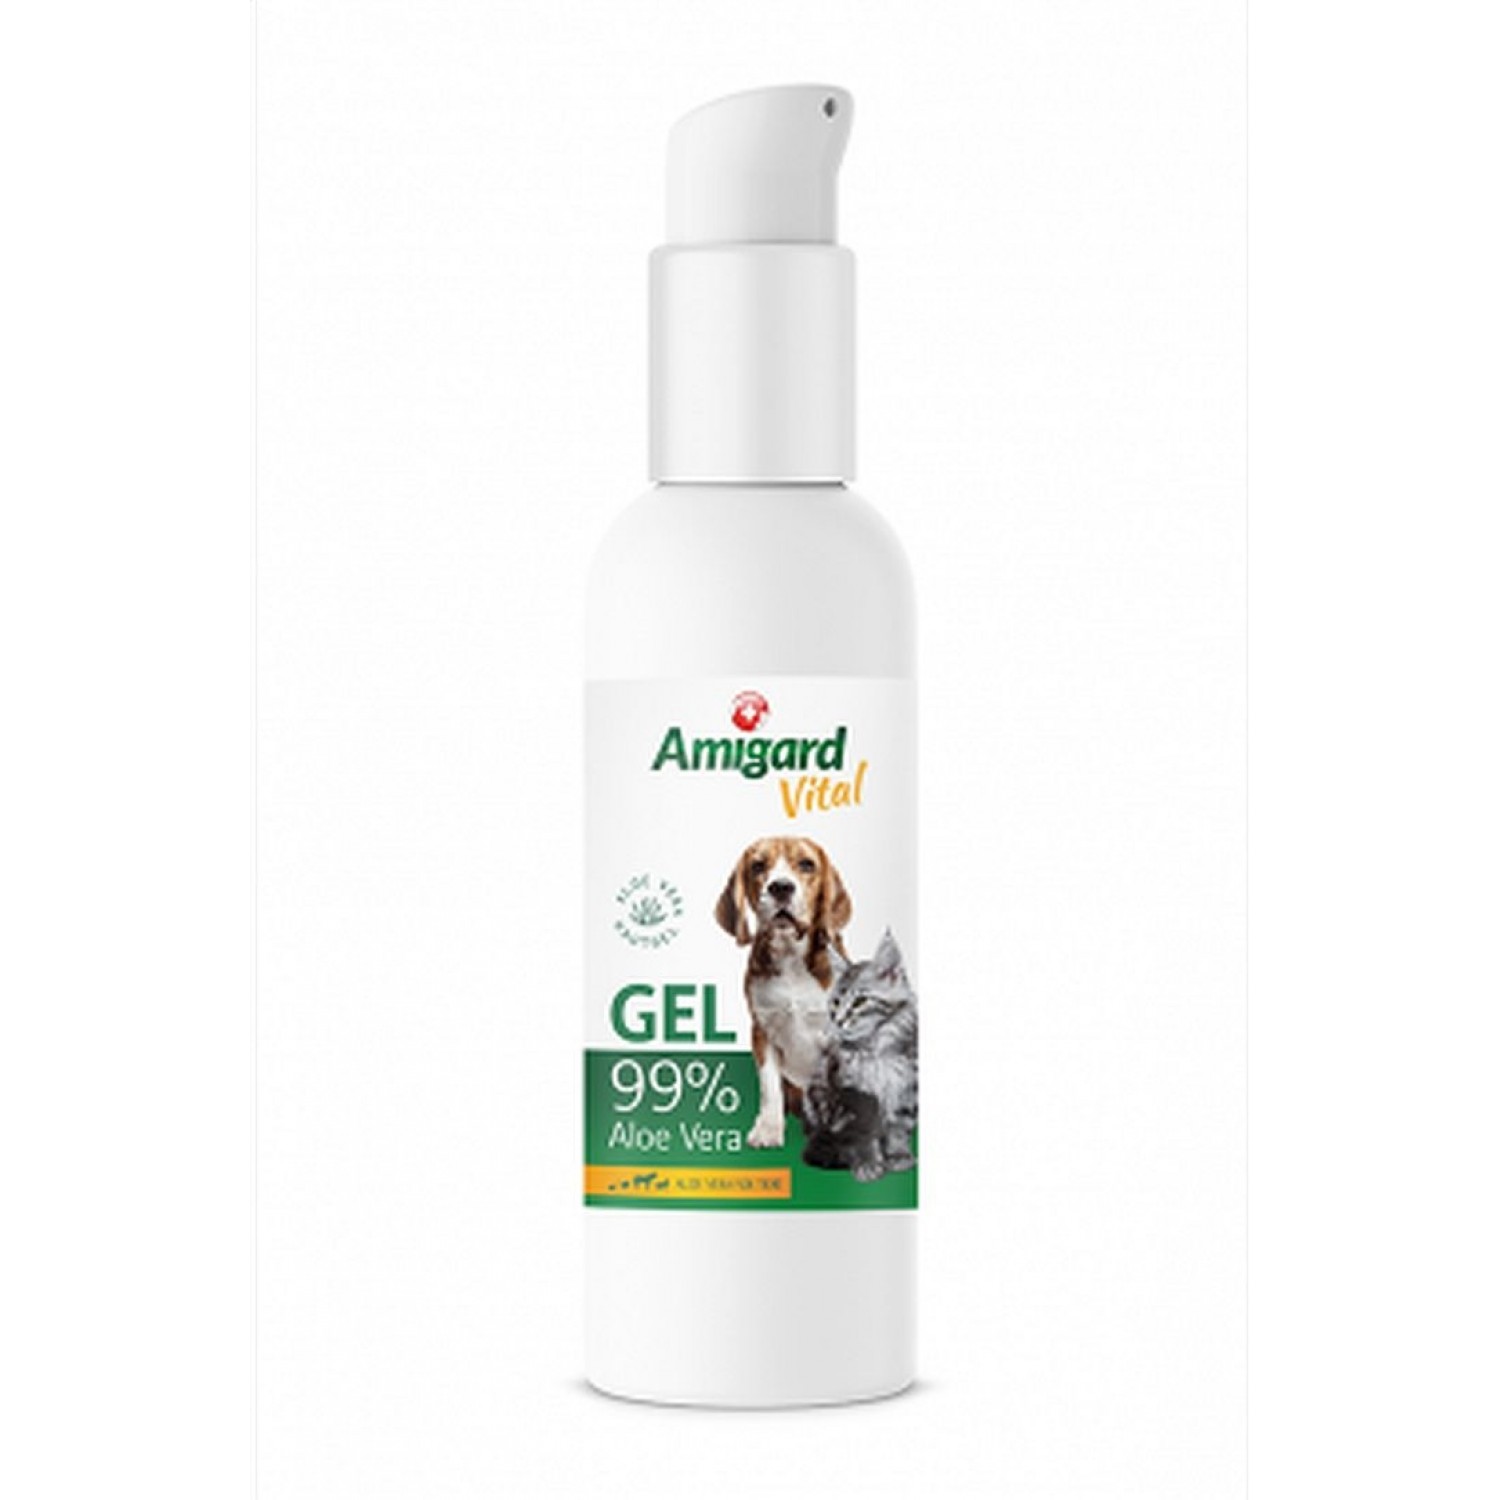 Amigard Aloe Vera Gel for Dogs, Cats & Horses